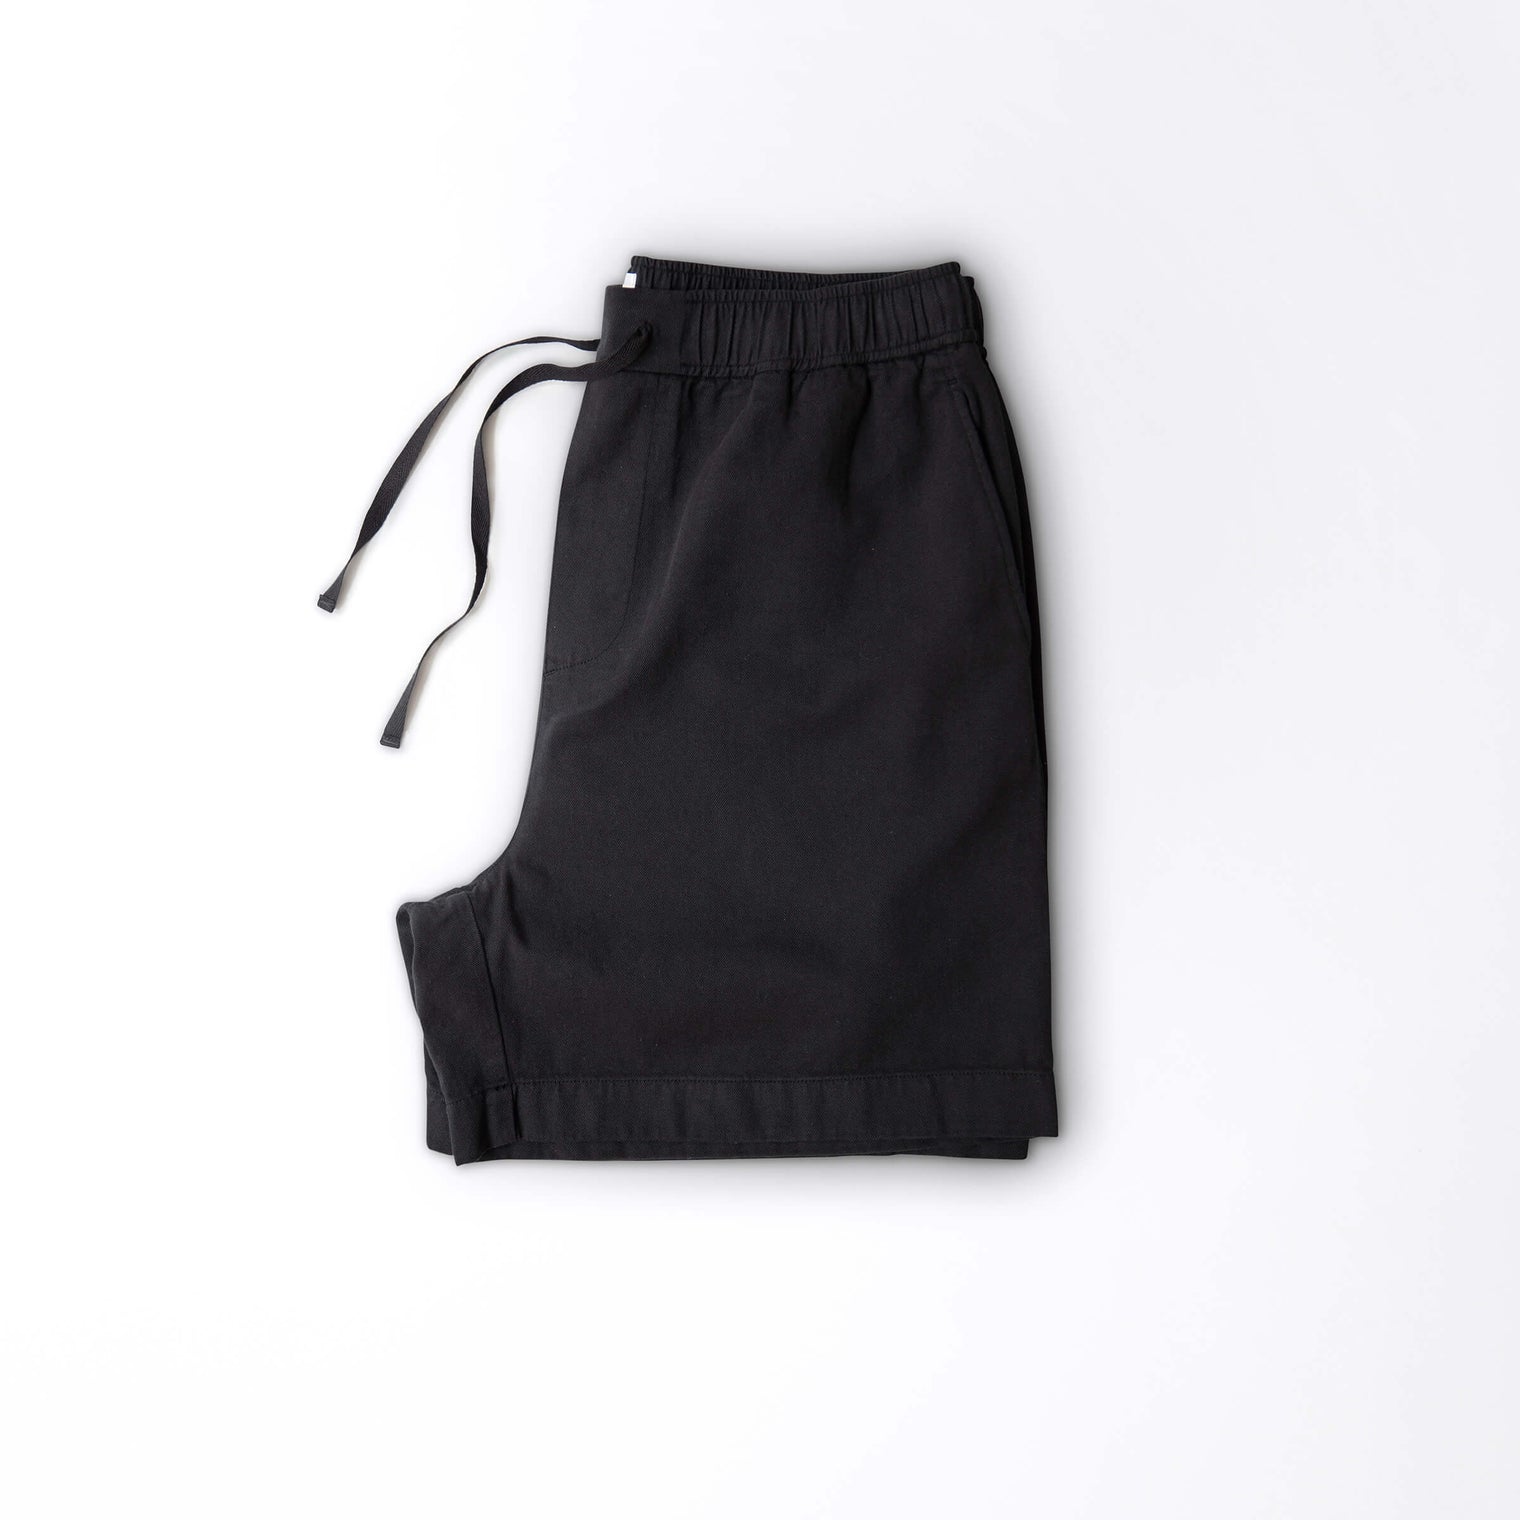 Drawstring Shorts (variants without media)